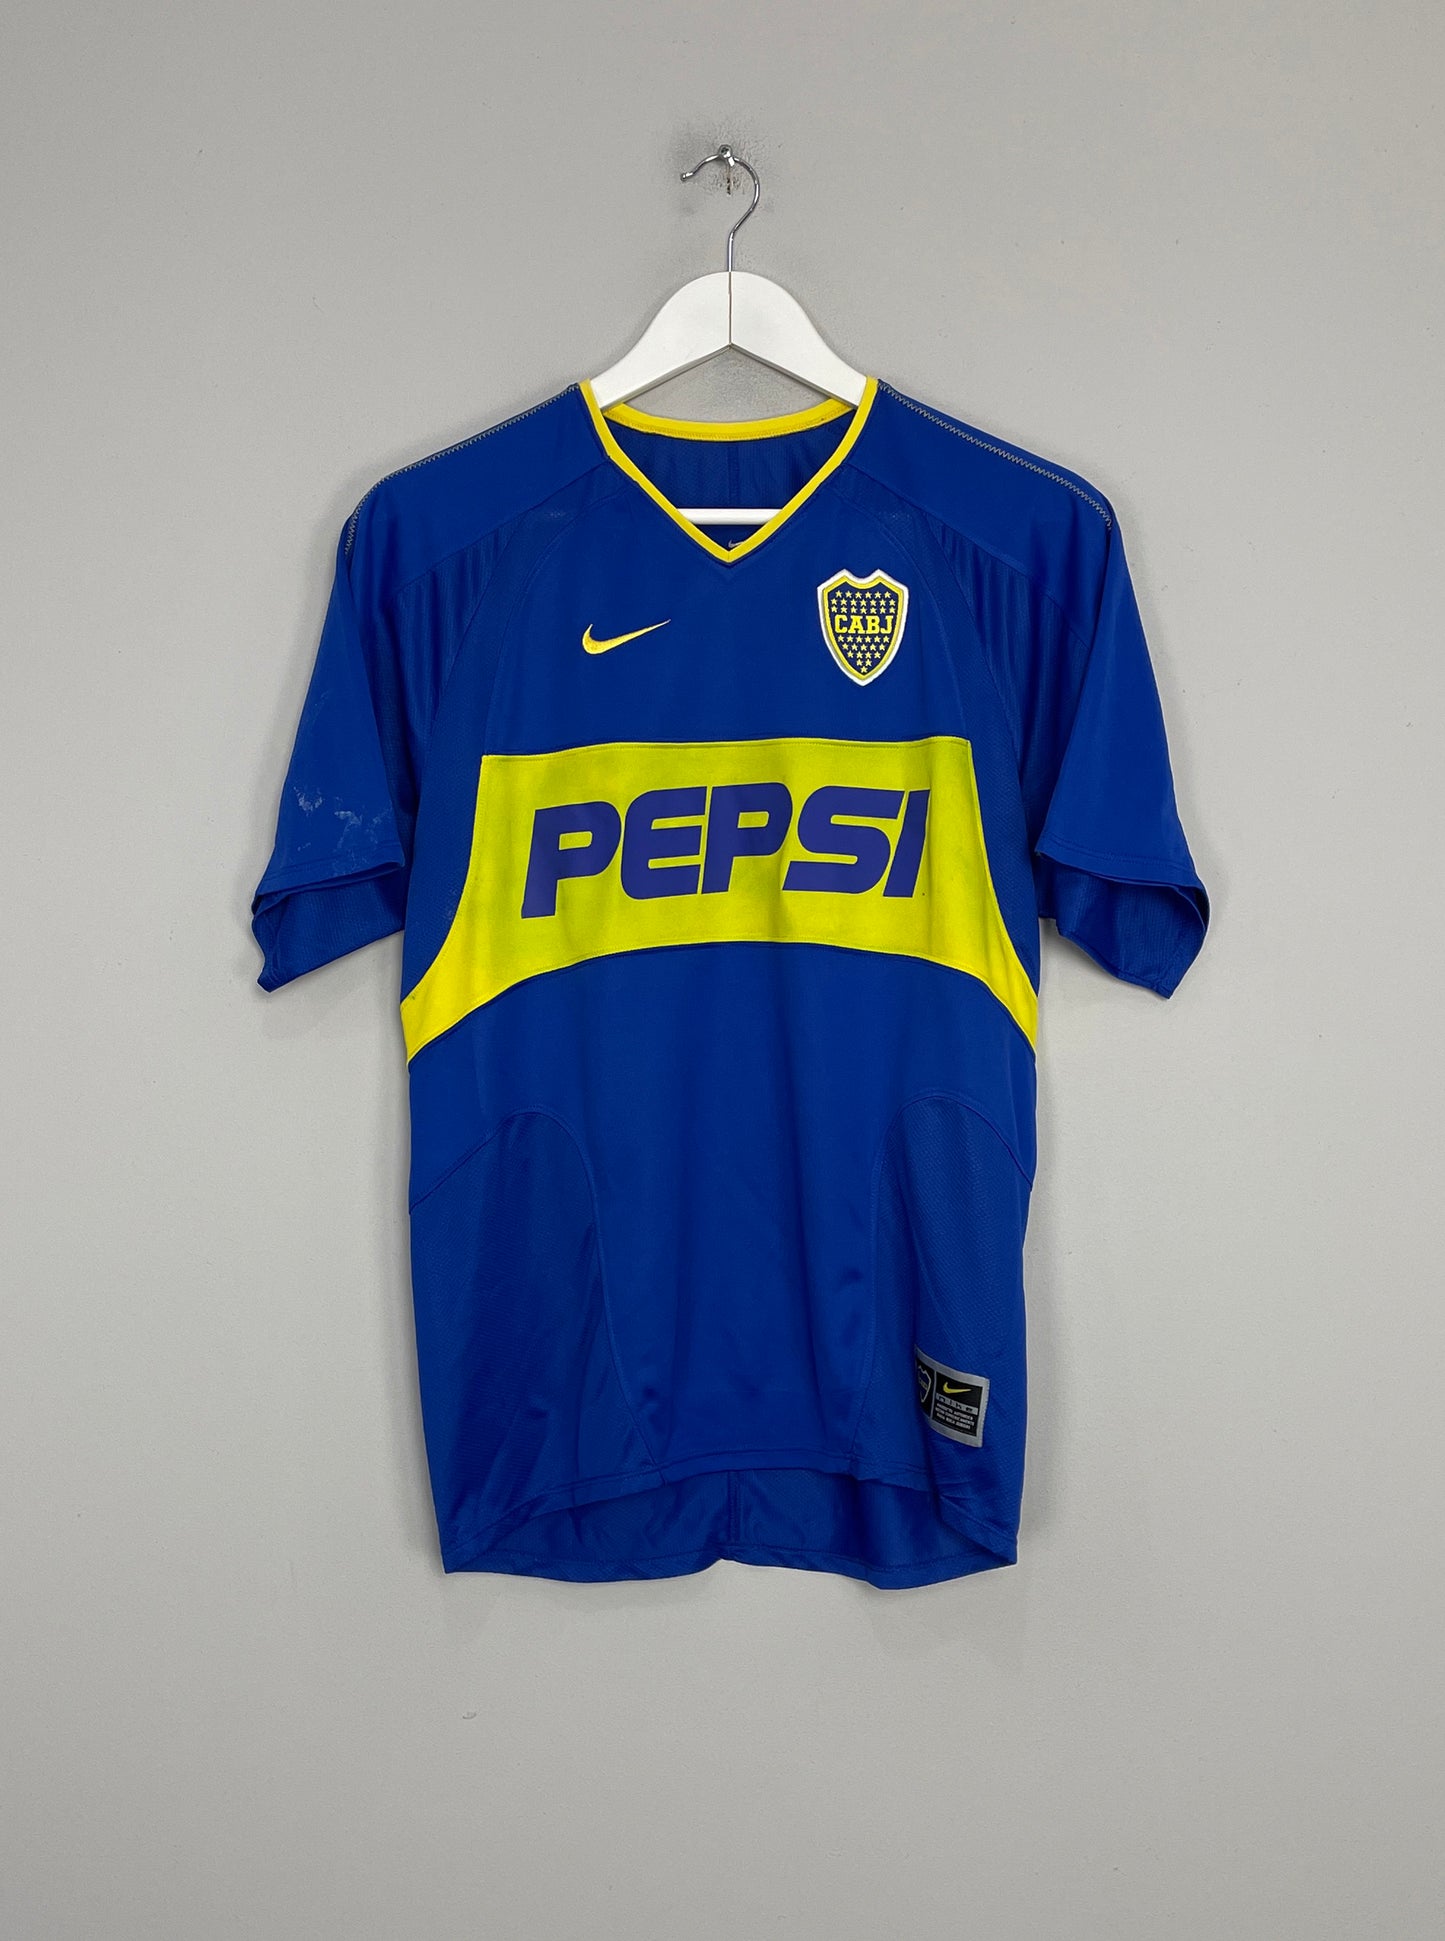 Image of the Boca Juniors shirt from the 2002/04 season